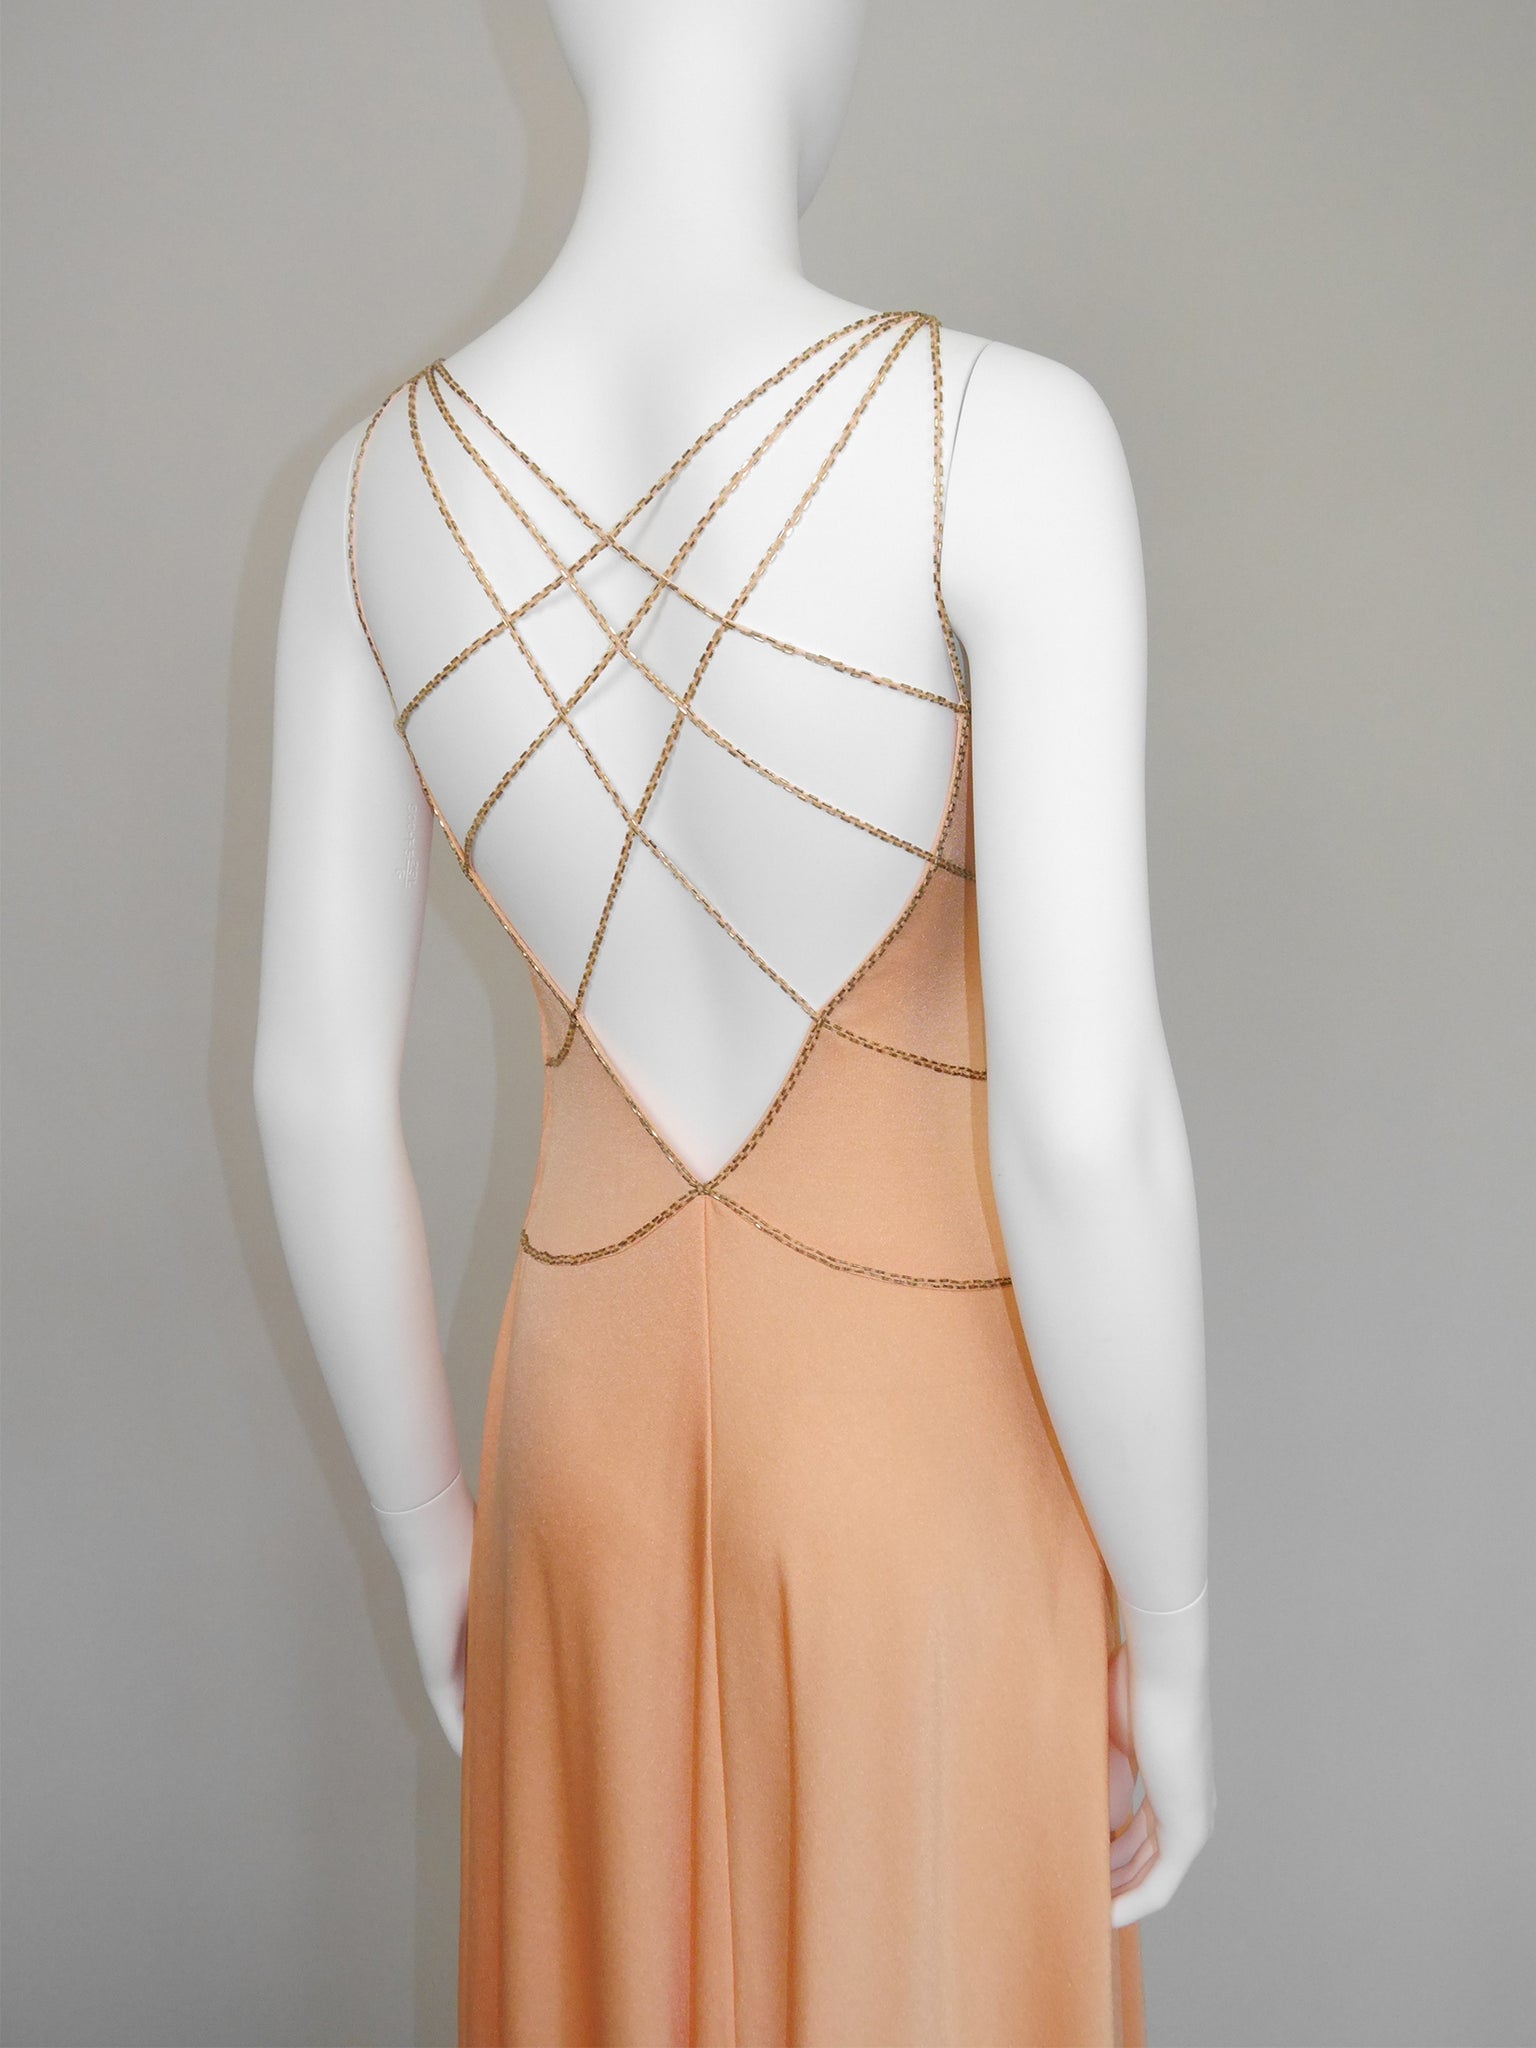 LORIS AZZARO c. 1976 Vintage Beaded Lattice Straps Maxi Evening Gown Size S